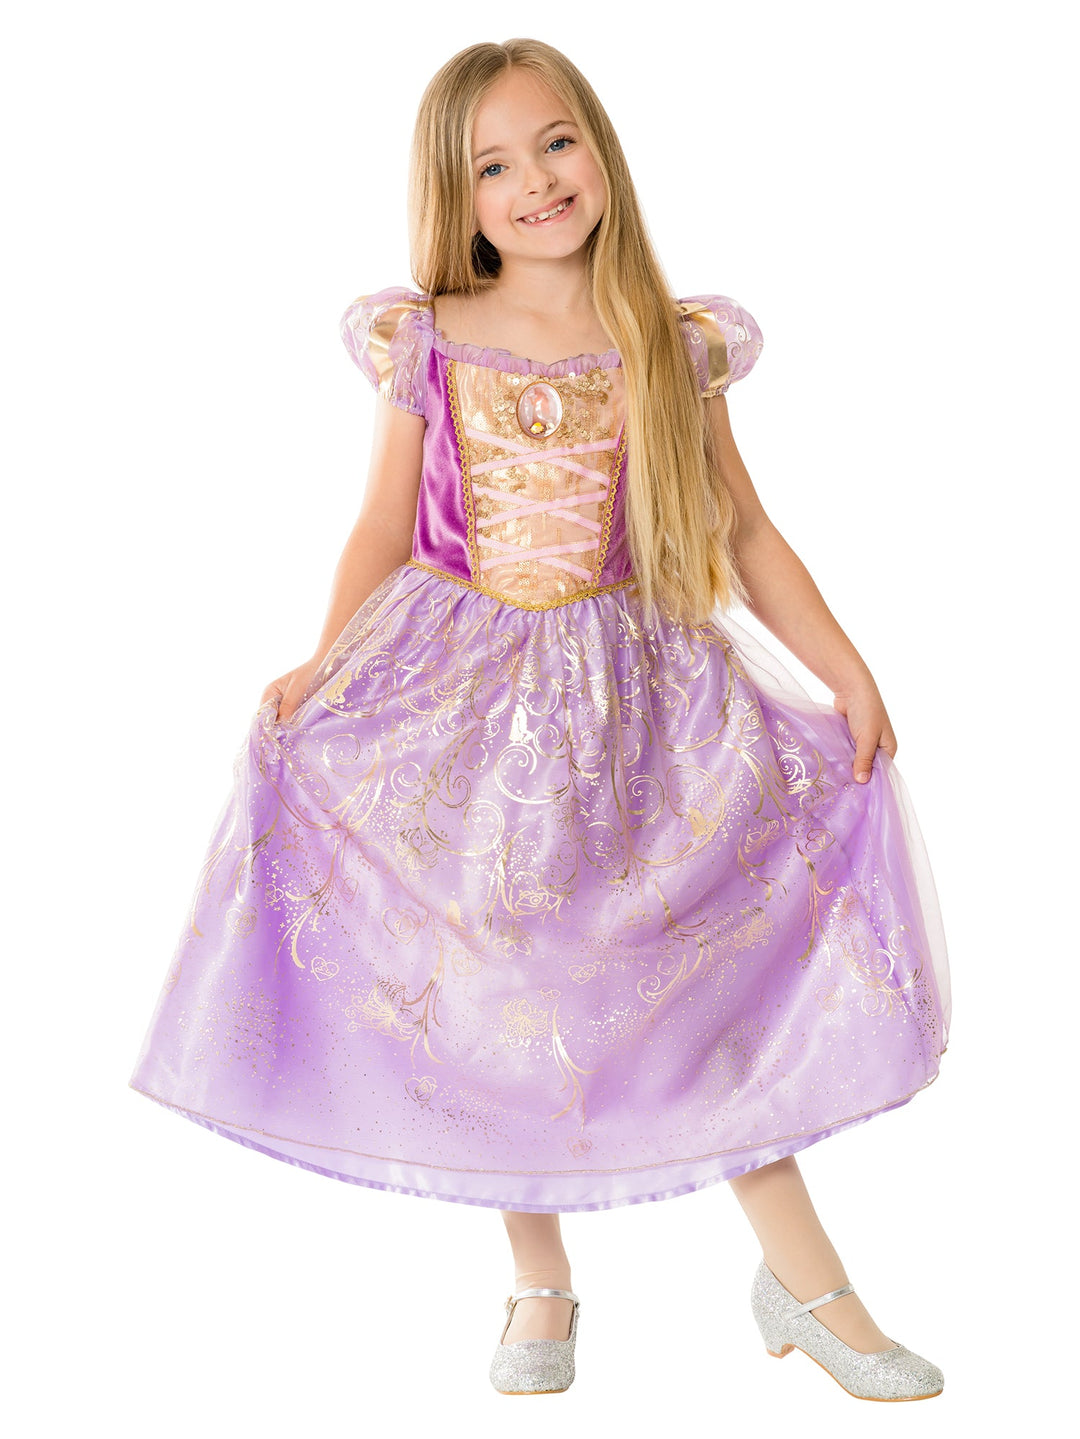 Ultimate Princess Rapunzel Deluxe_1 rub-3011173-4